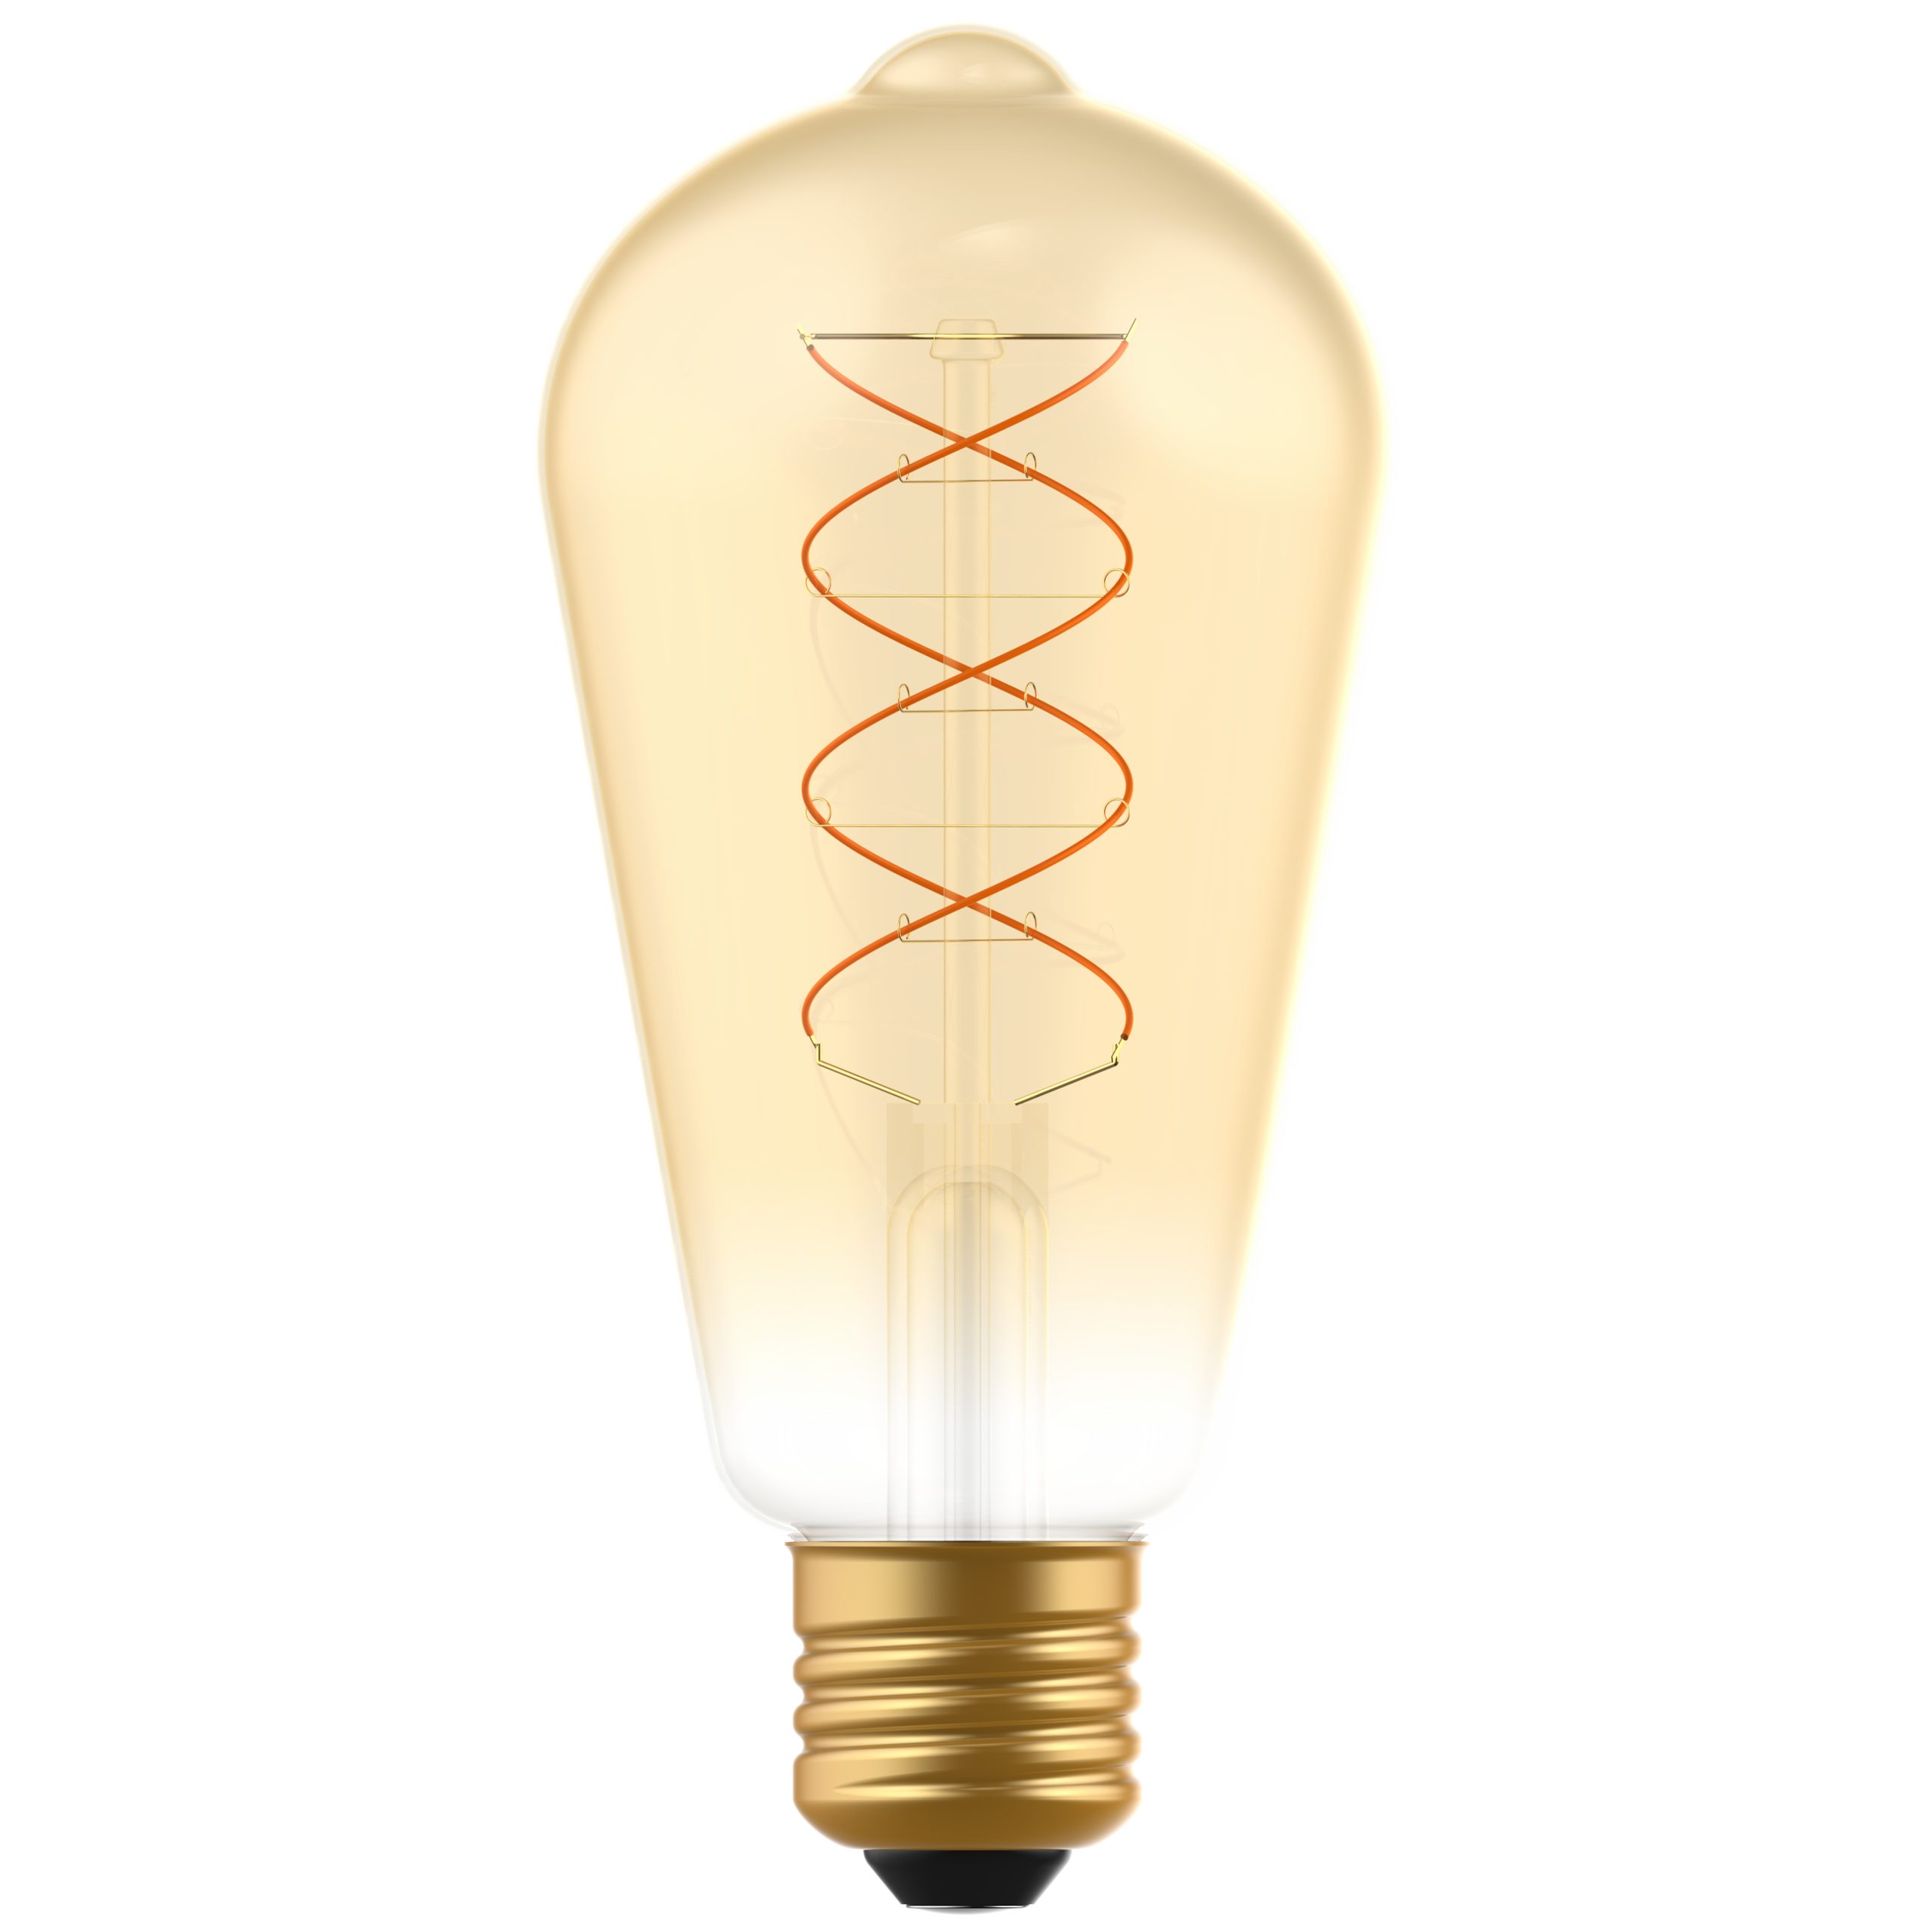 LED's light LED-Leuchtmittel 0620194 LED Edison, E27, E27 dimmbar 5W extra-warmweiß Gold ST64